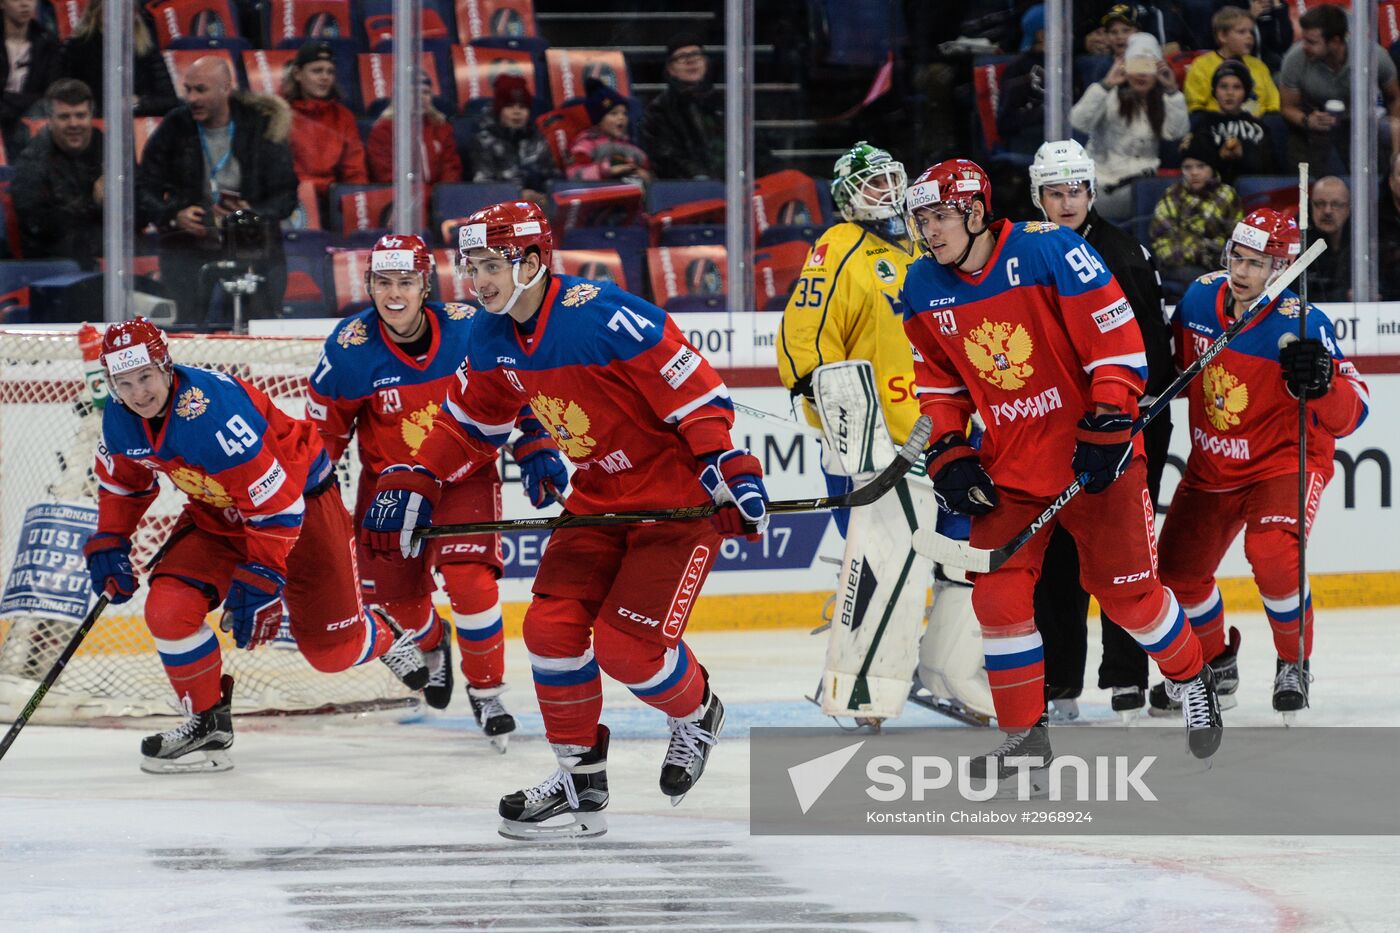 Karjala Ice Hockey Tournament 2016. Sweden vs. Russialandscape, horizontal